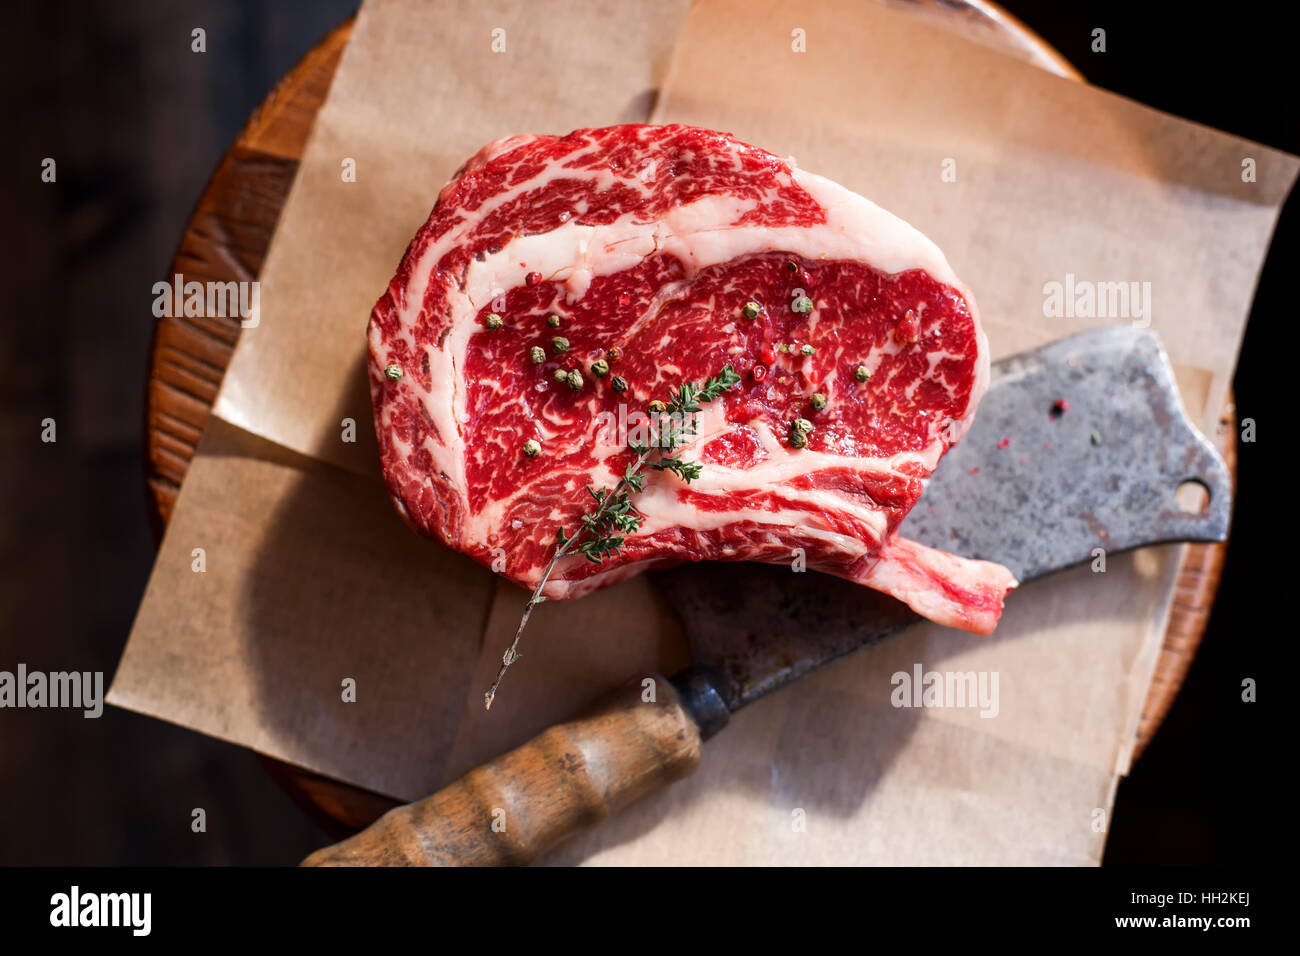 Bone In Rib Eye row Steak on pieces of salt on a wooden board. Stock image Stock Photo